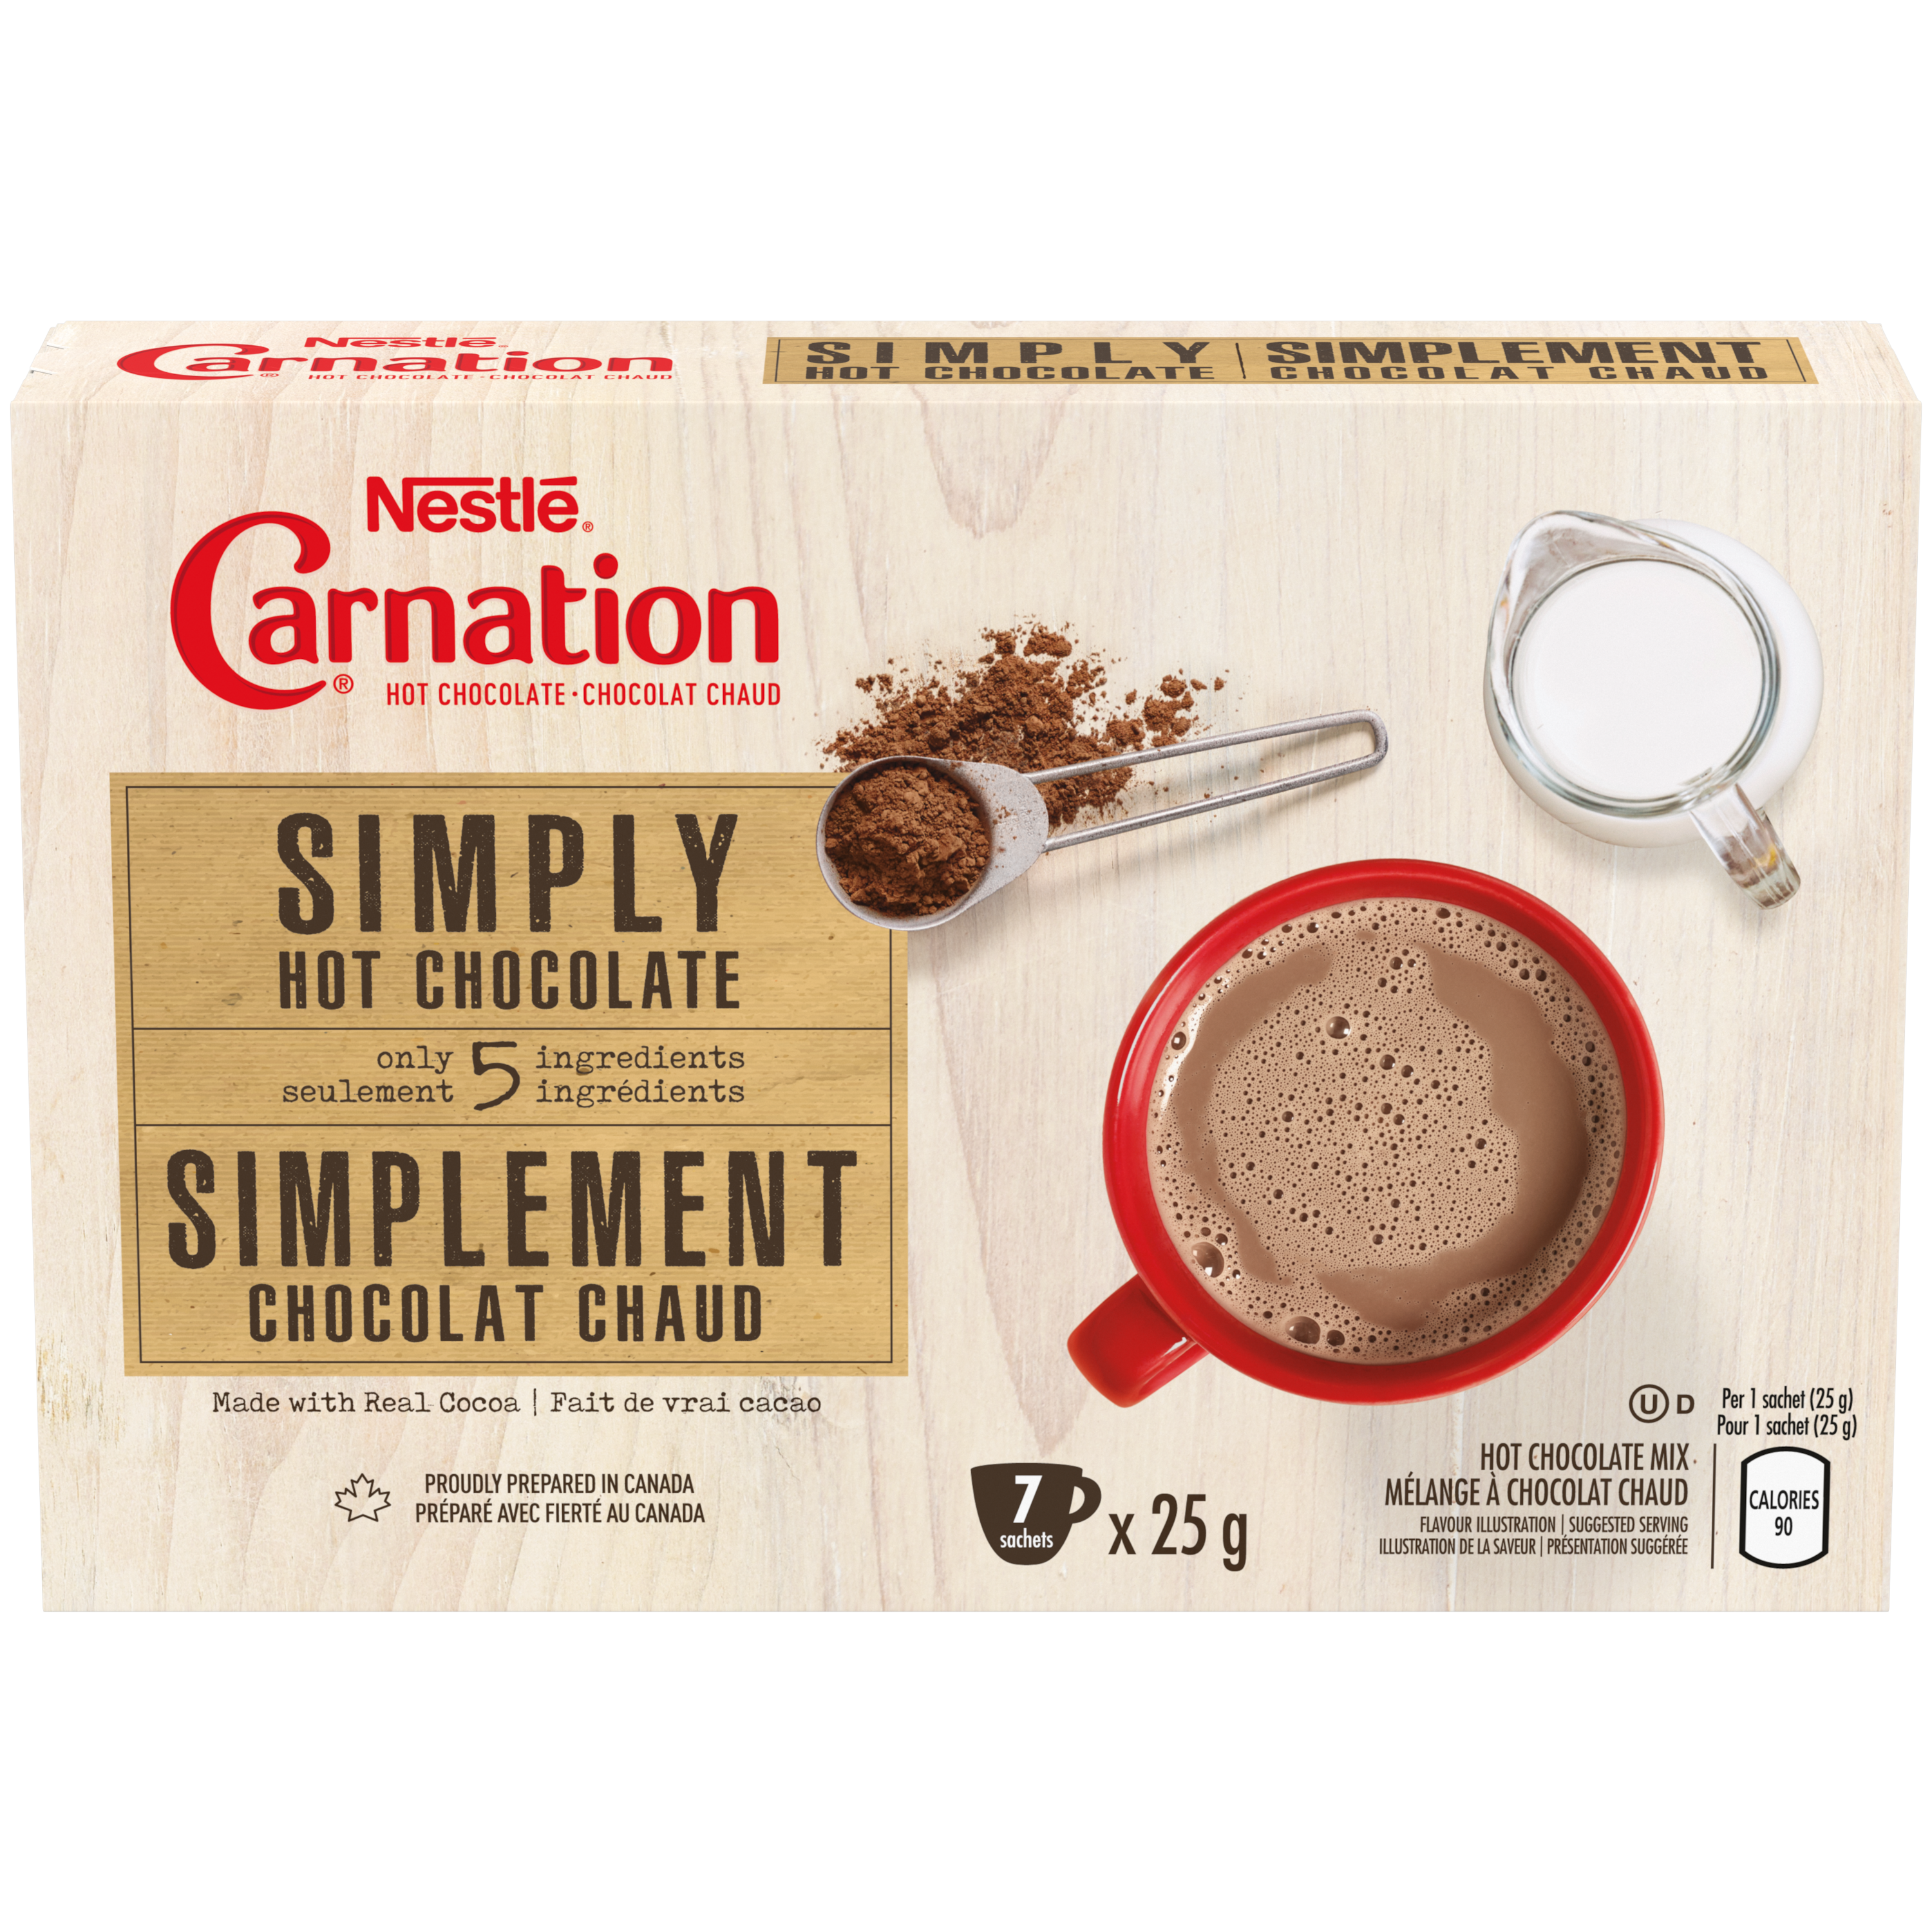  CARNATION Simply Hot Chocolate Carton 7 x 25 g